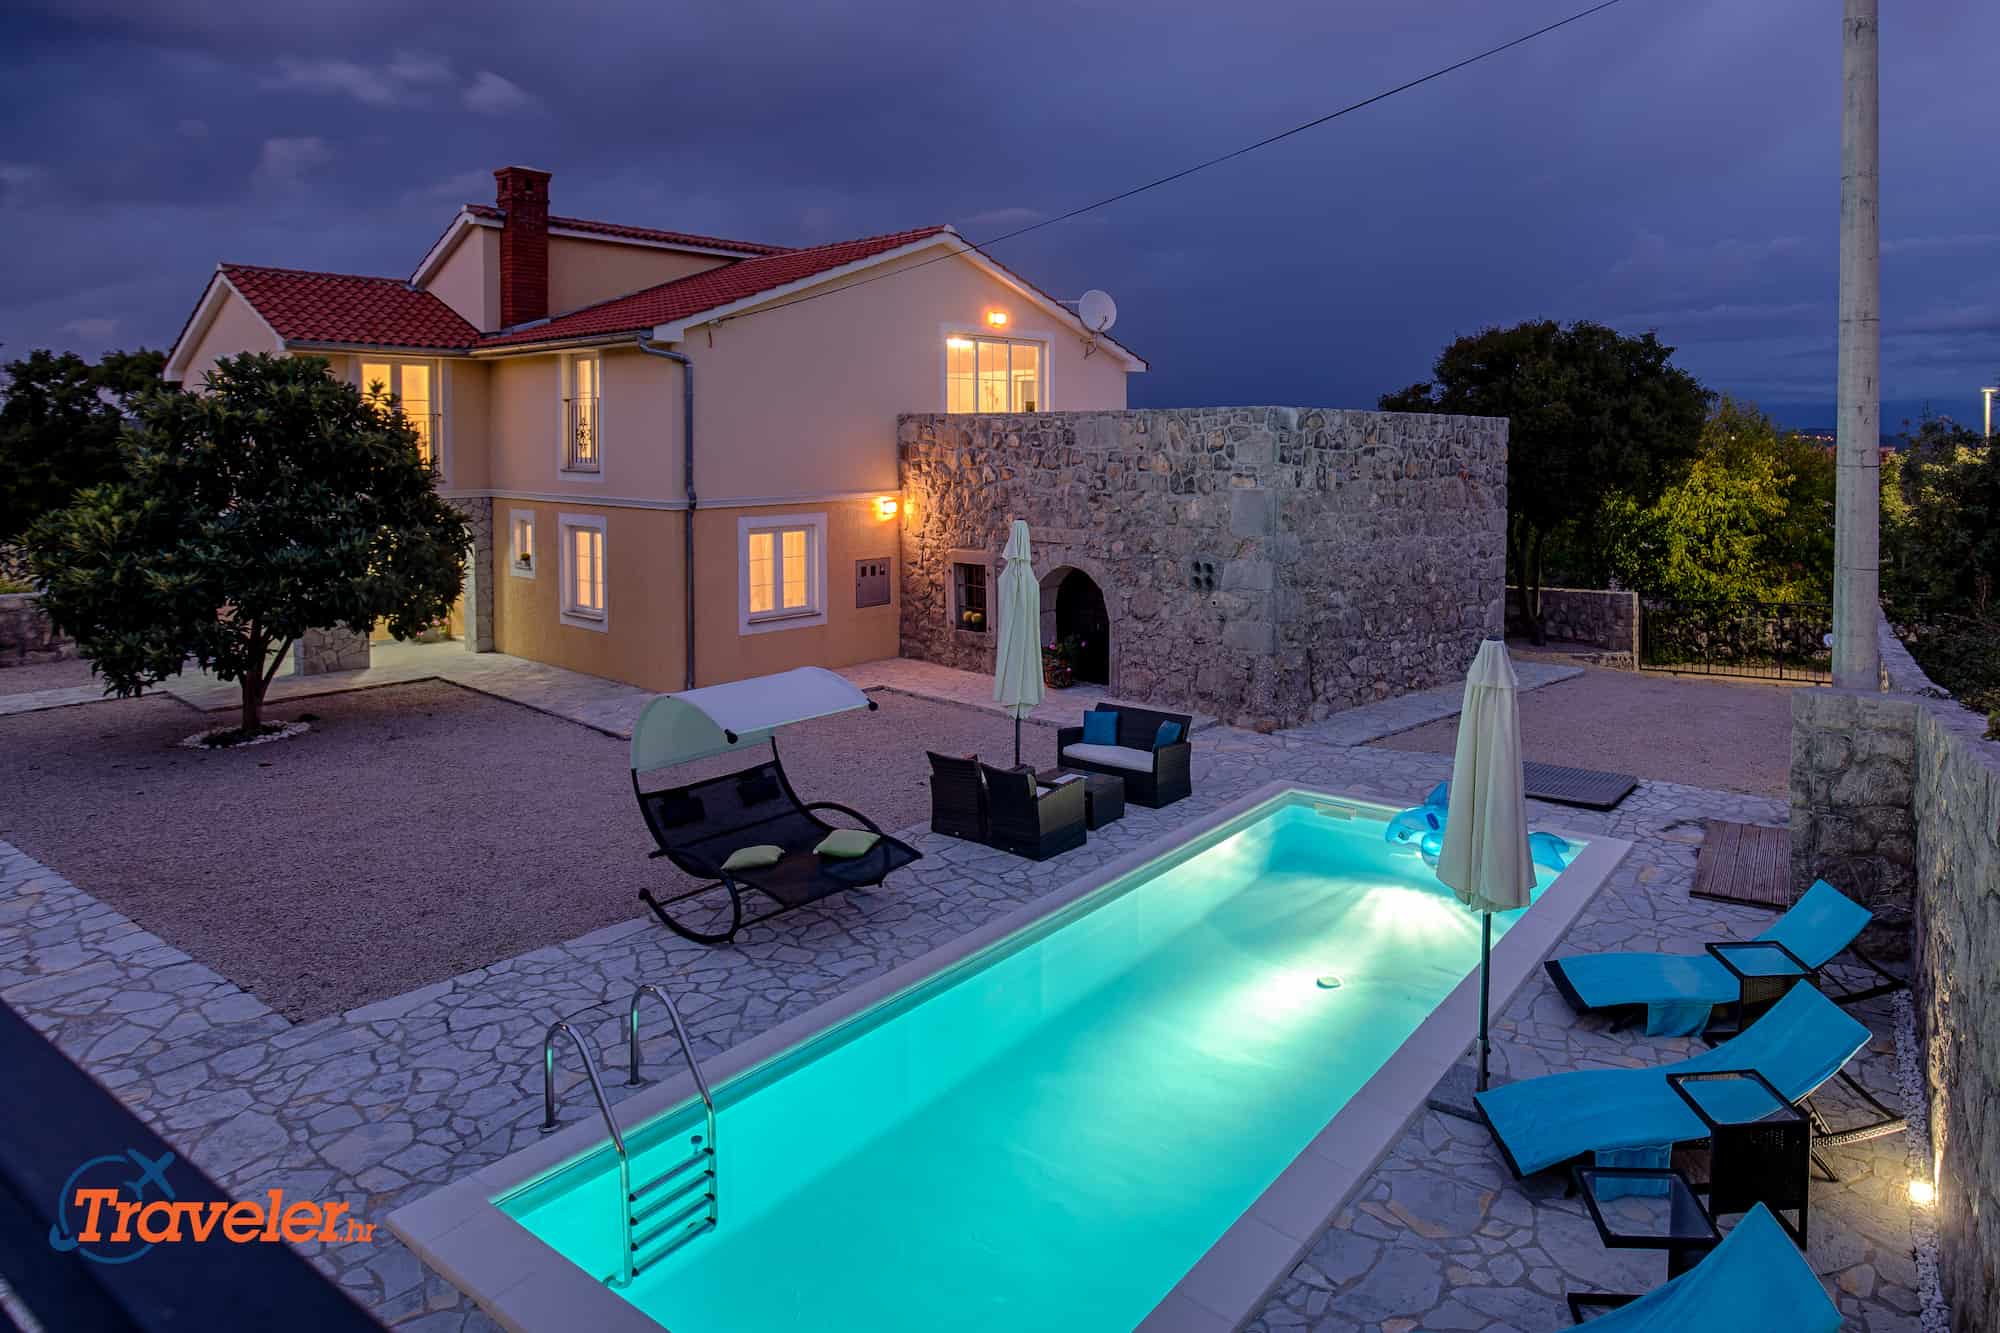 Luxury and modern villa with pool, nice yard